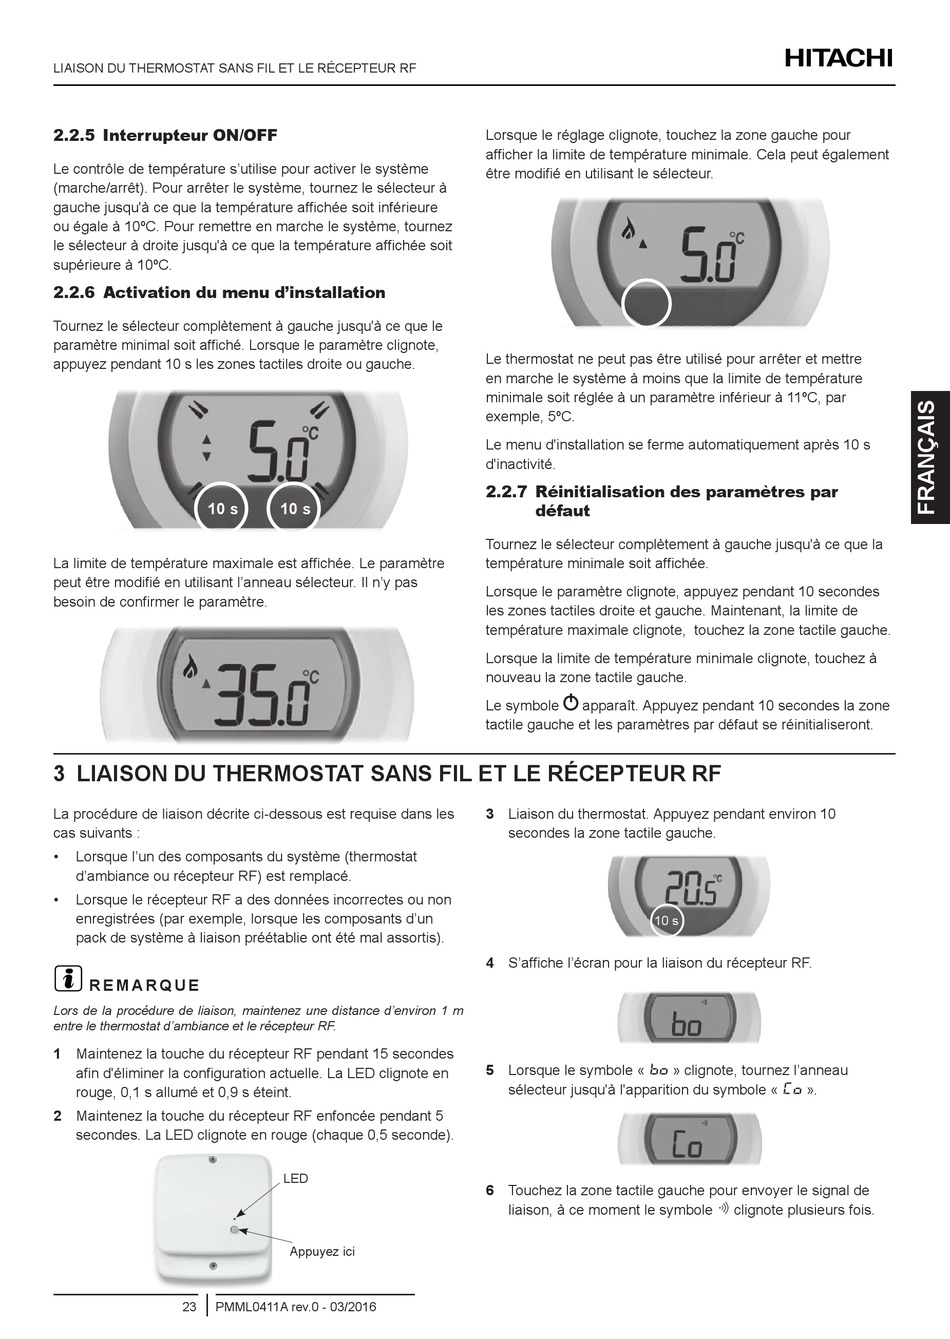 Liaison Du Thermostat Sans Fil Et Le Récepteur Rf - Hitachi ATW-RTU-05  Installations- Und Betriebshandbuch [Seite 29] | ManualsLib